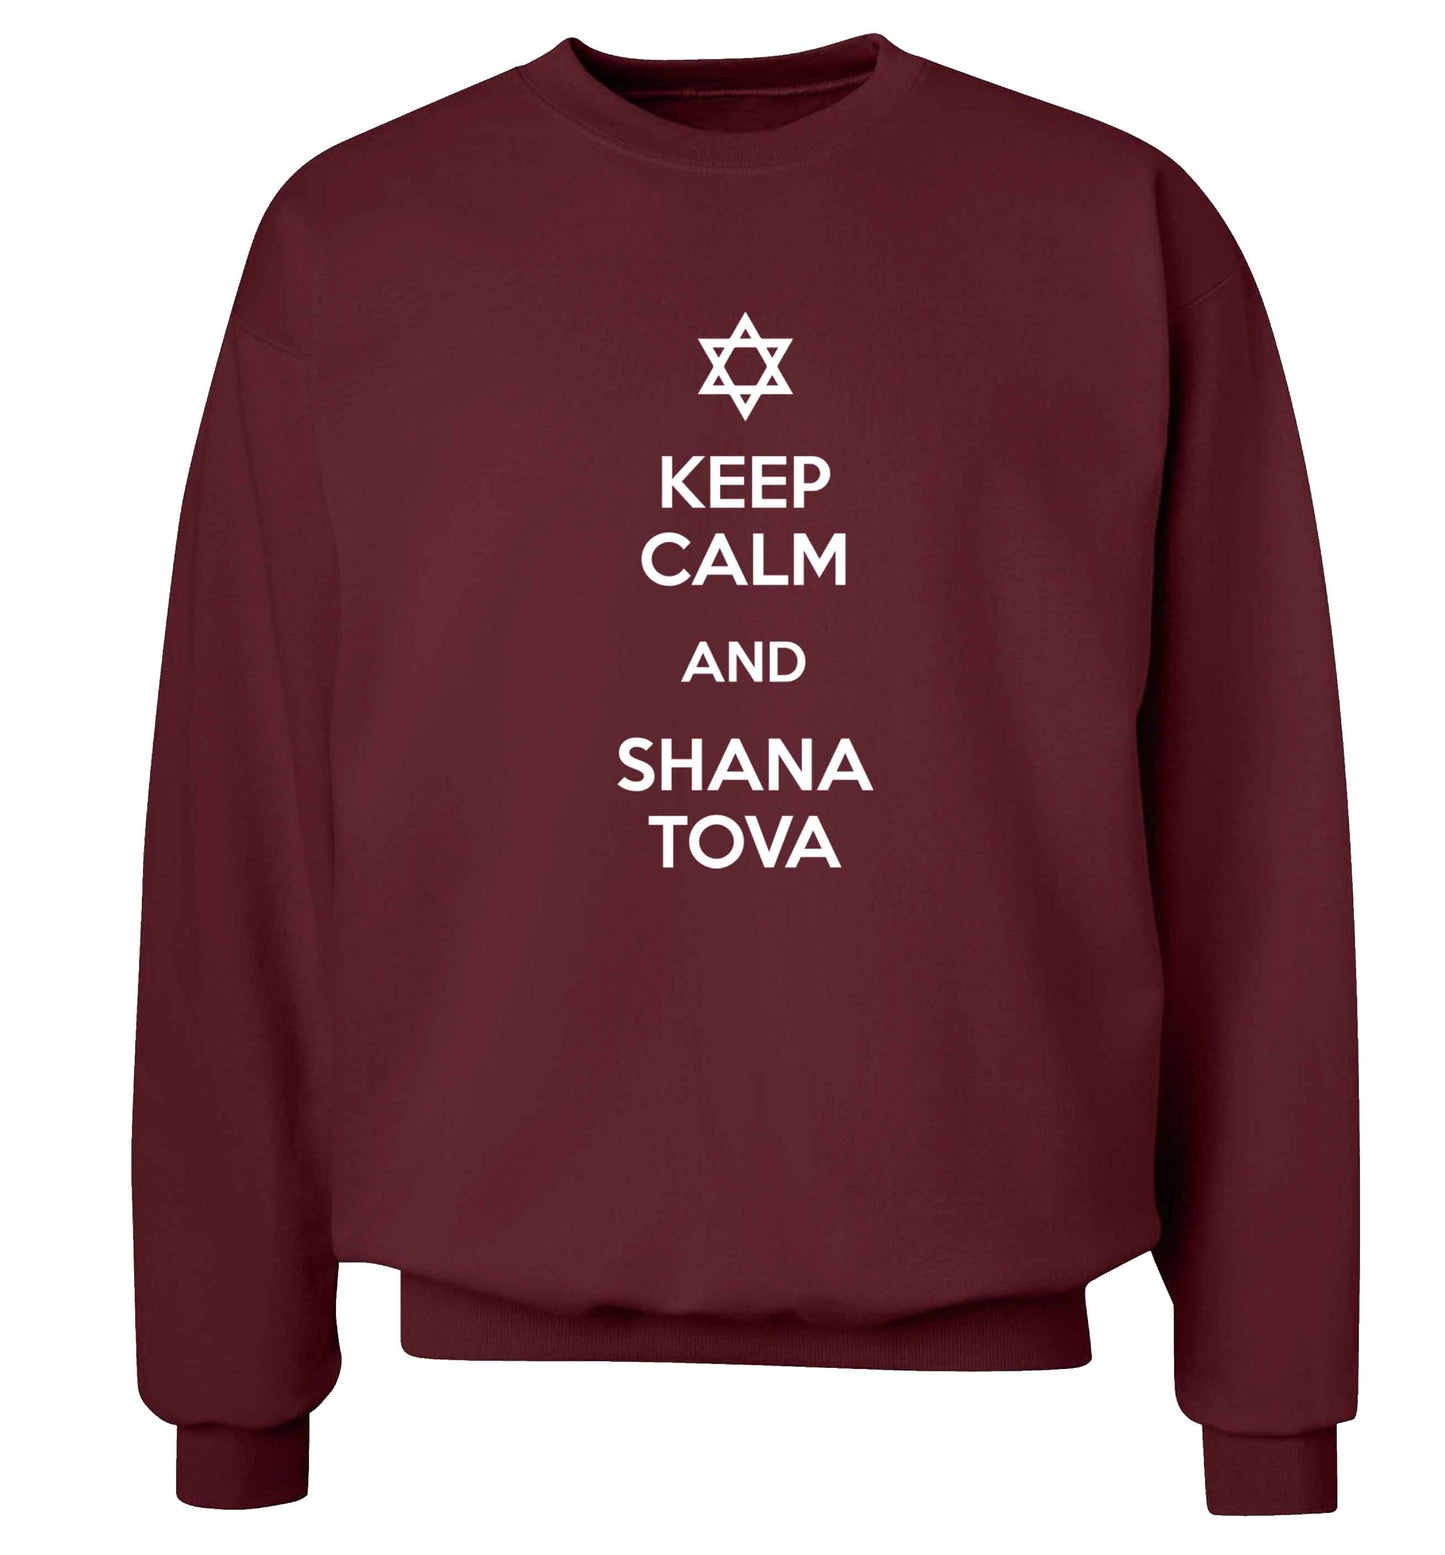 Keep calm and shana tova Adult's unisex maroon Sweater 2XL